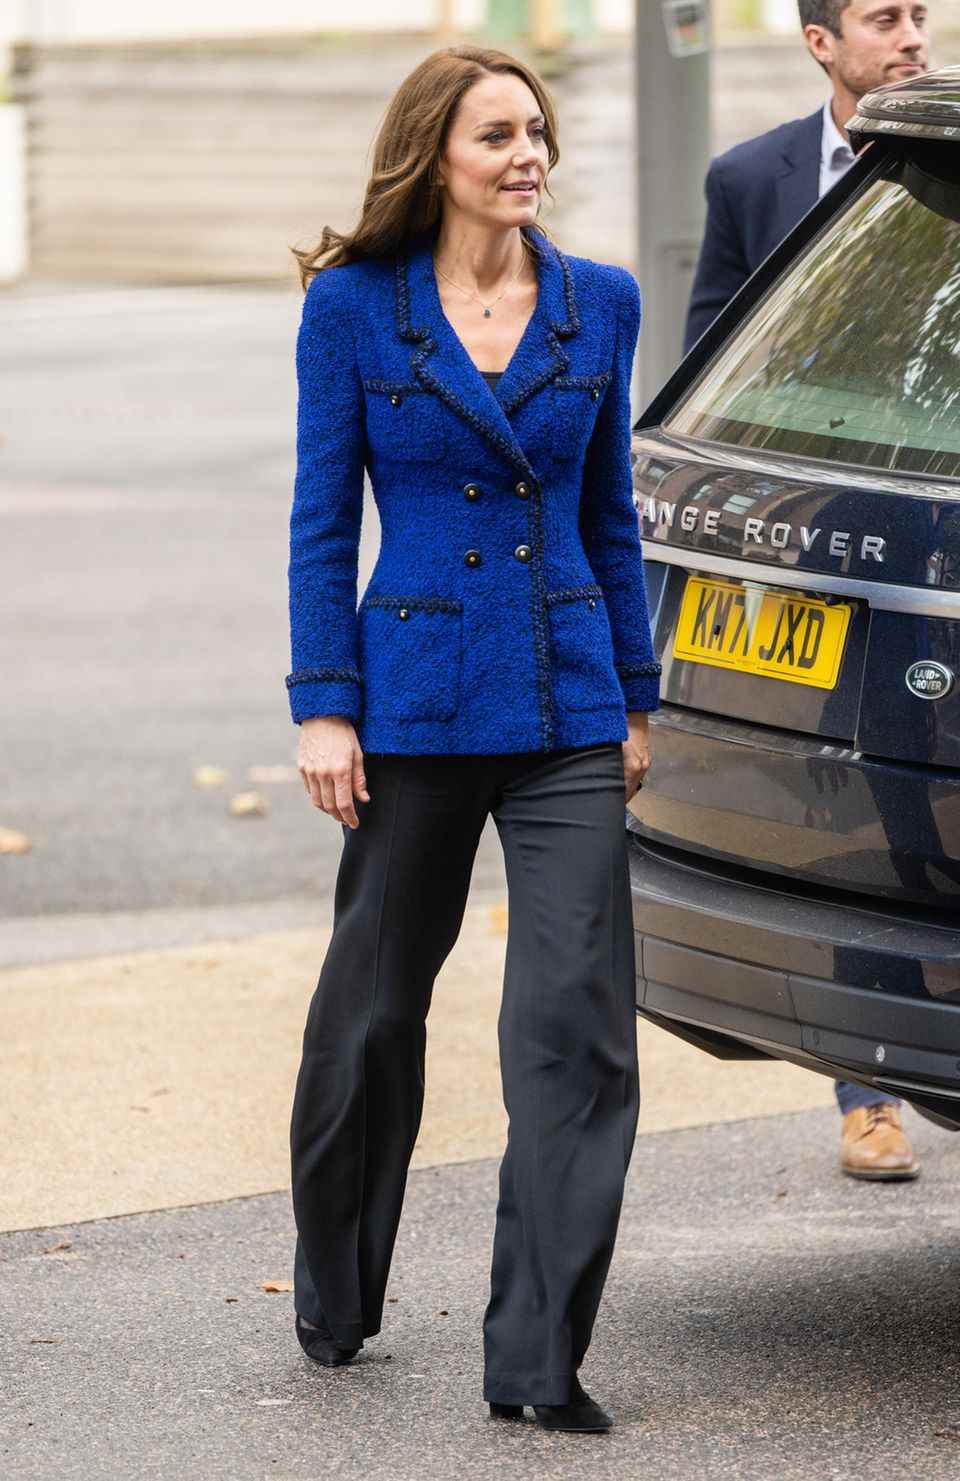 Princess Kate likes to wear tweed